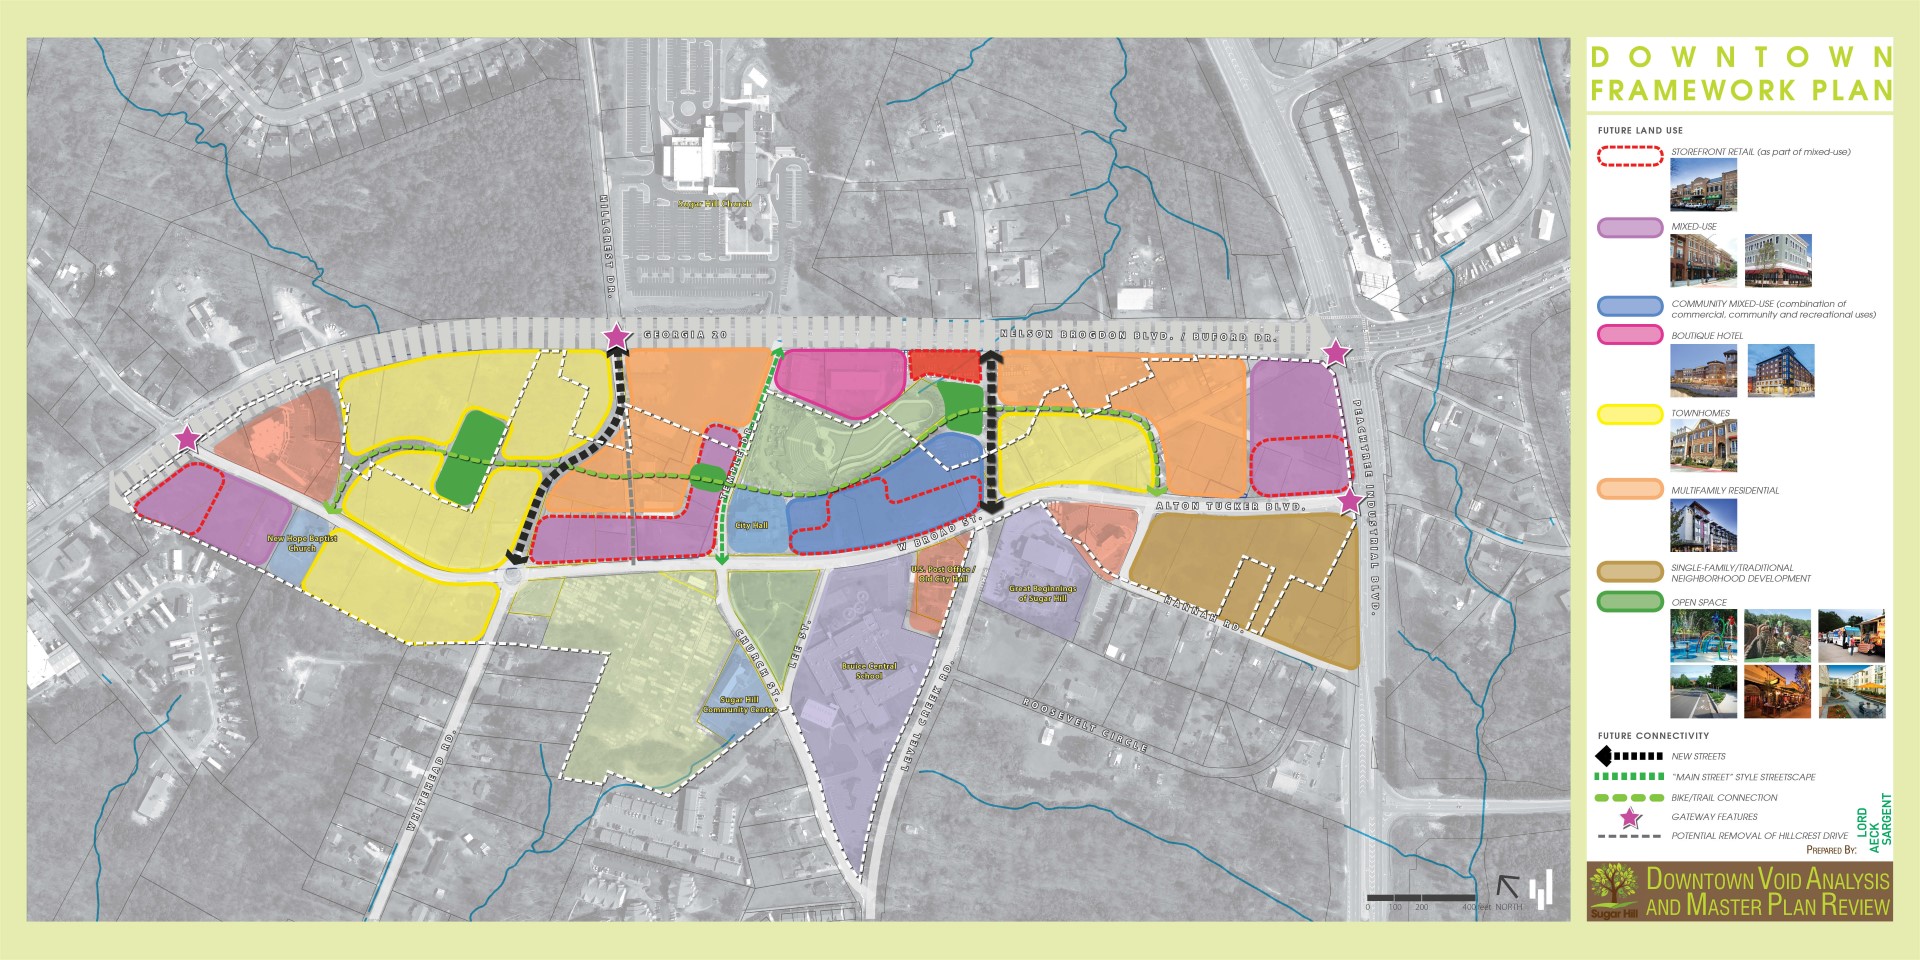 Downtown Framework Plan